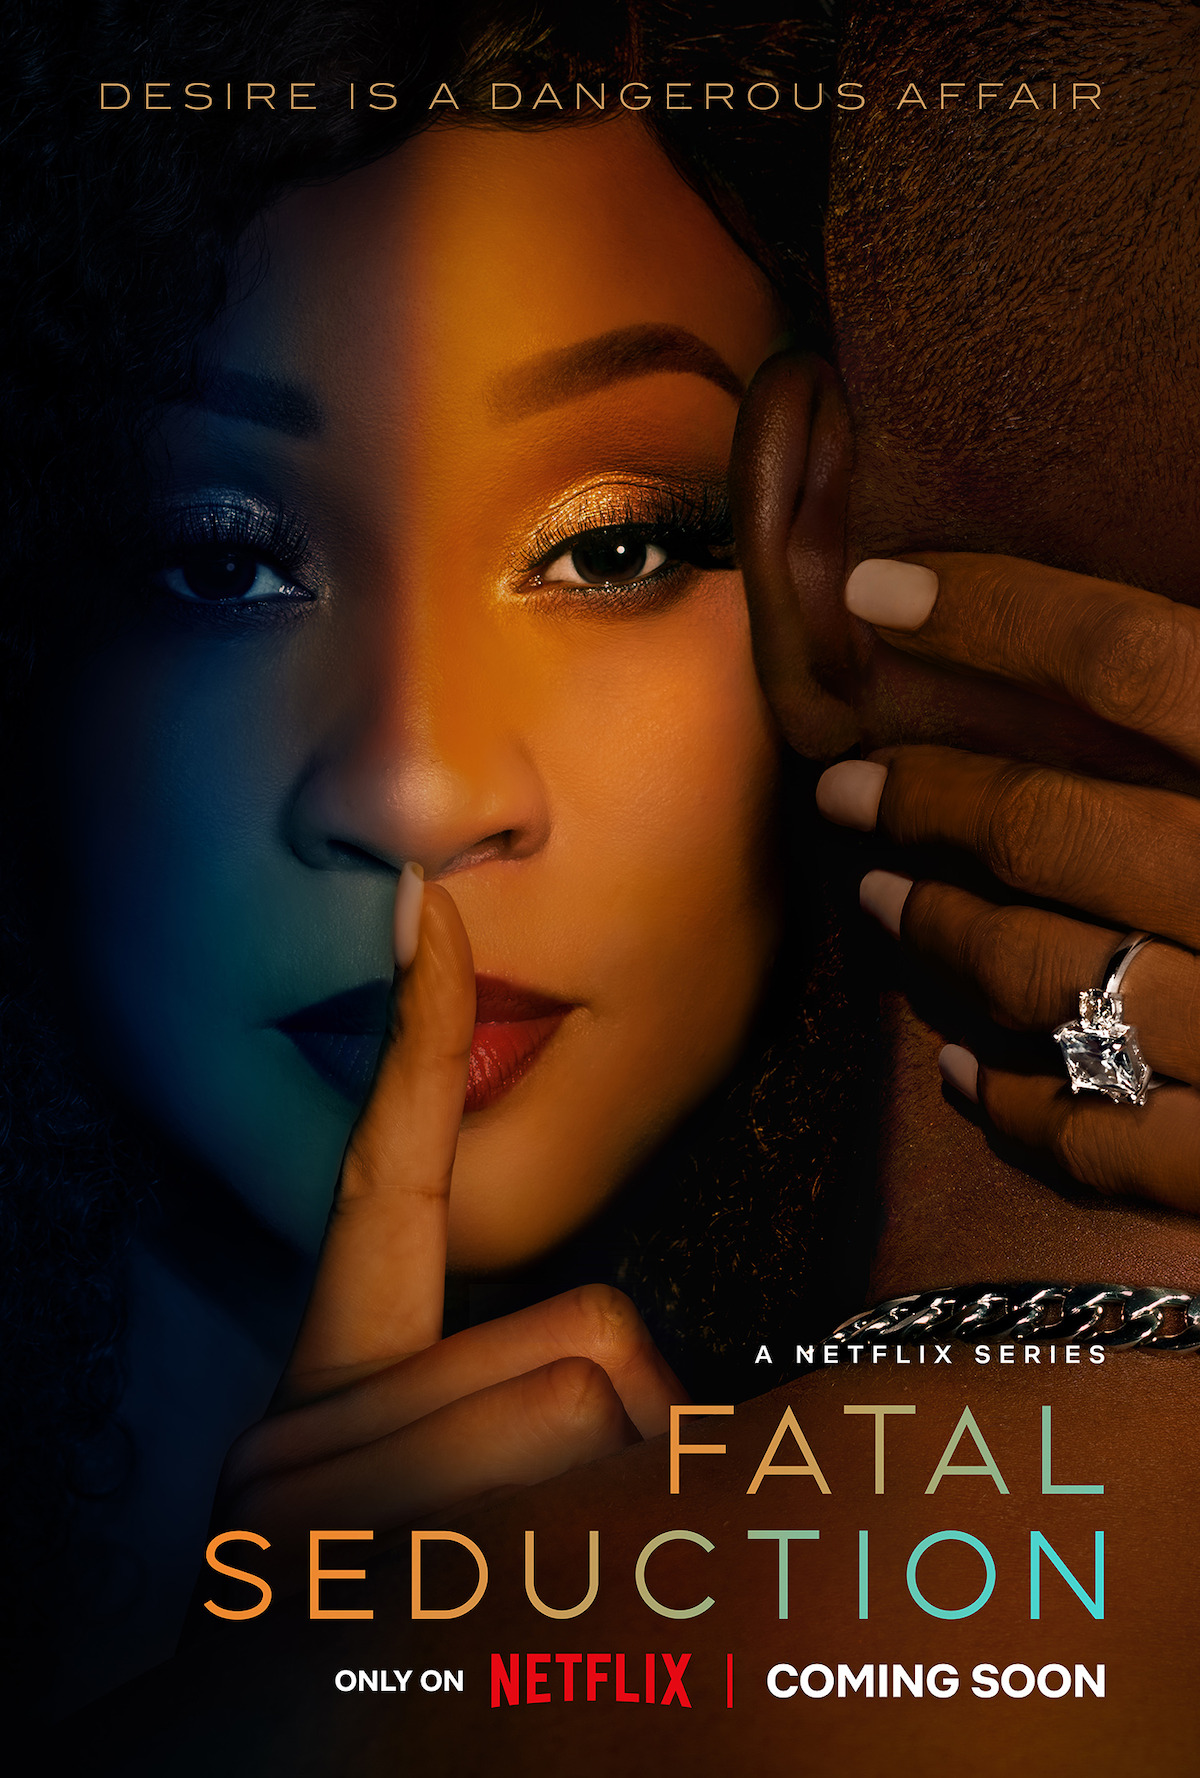 Fatal Seduction Cast, Plot, Release Date and Trailer picture